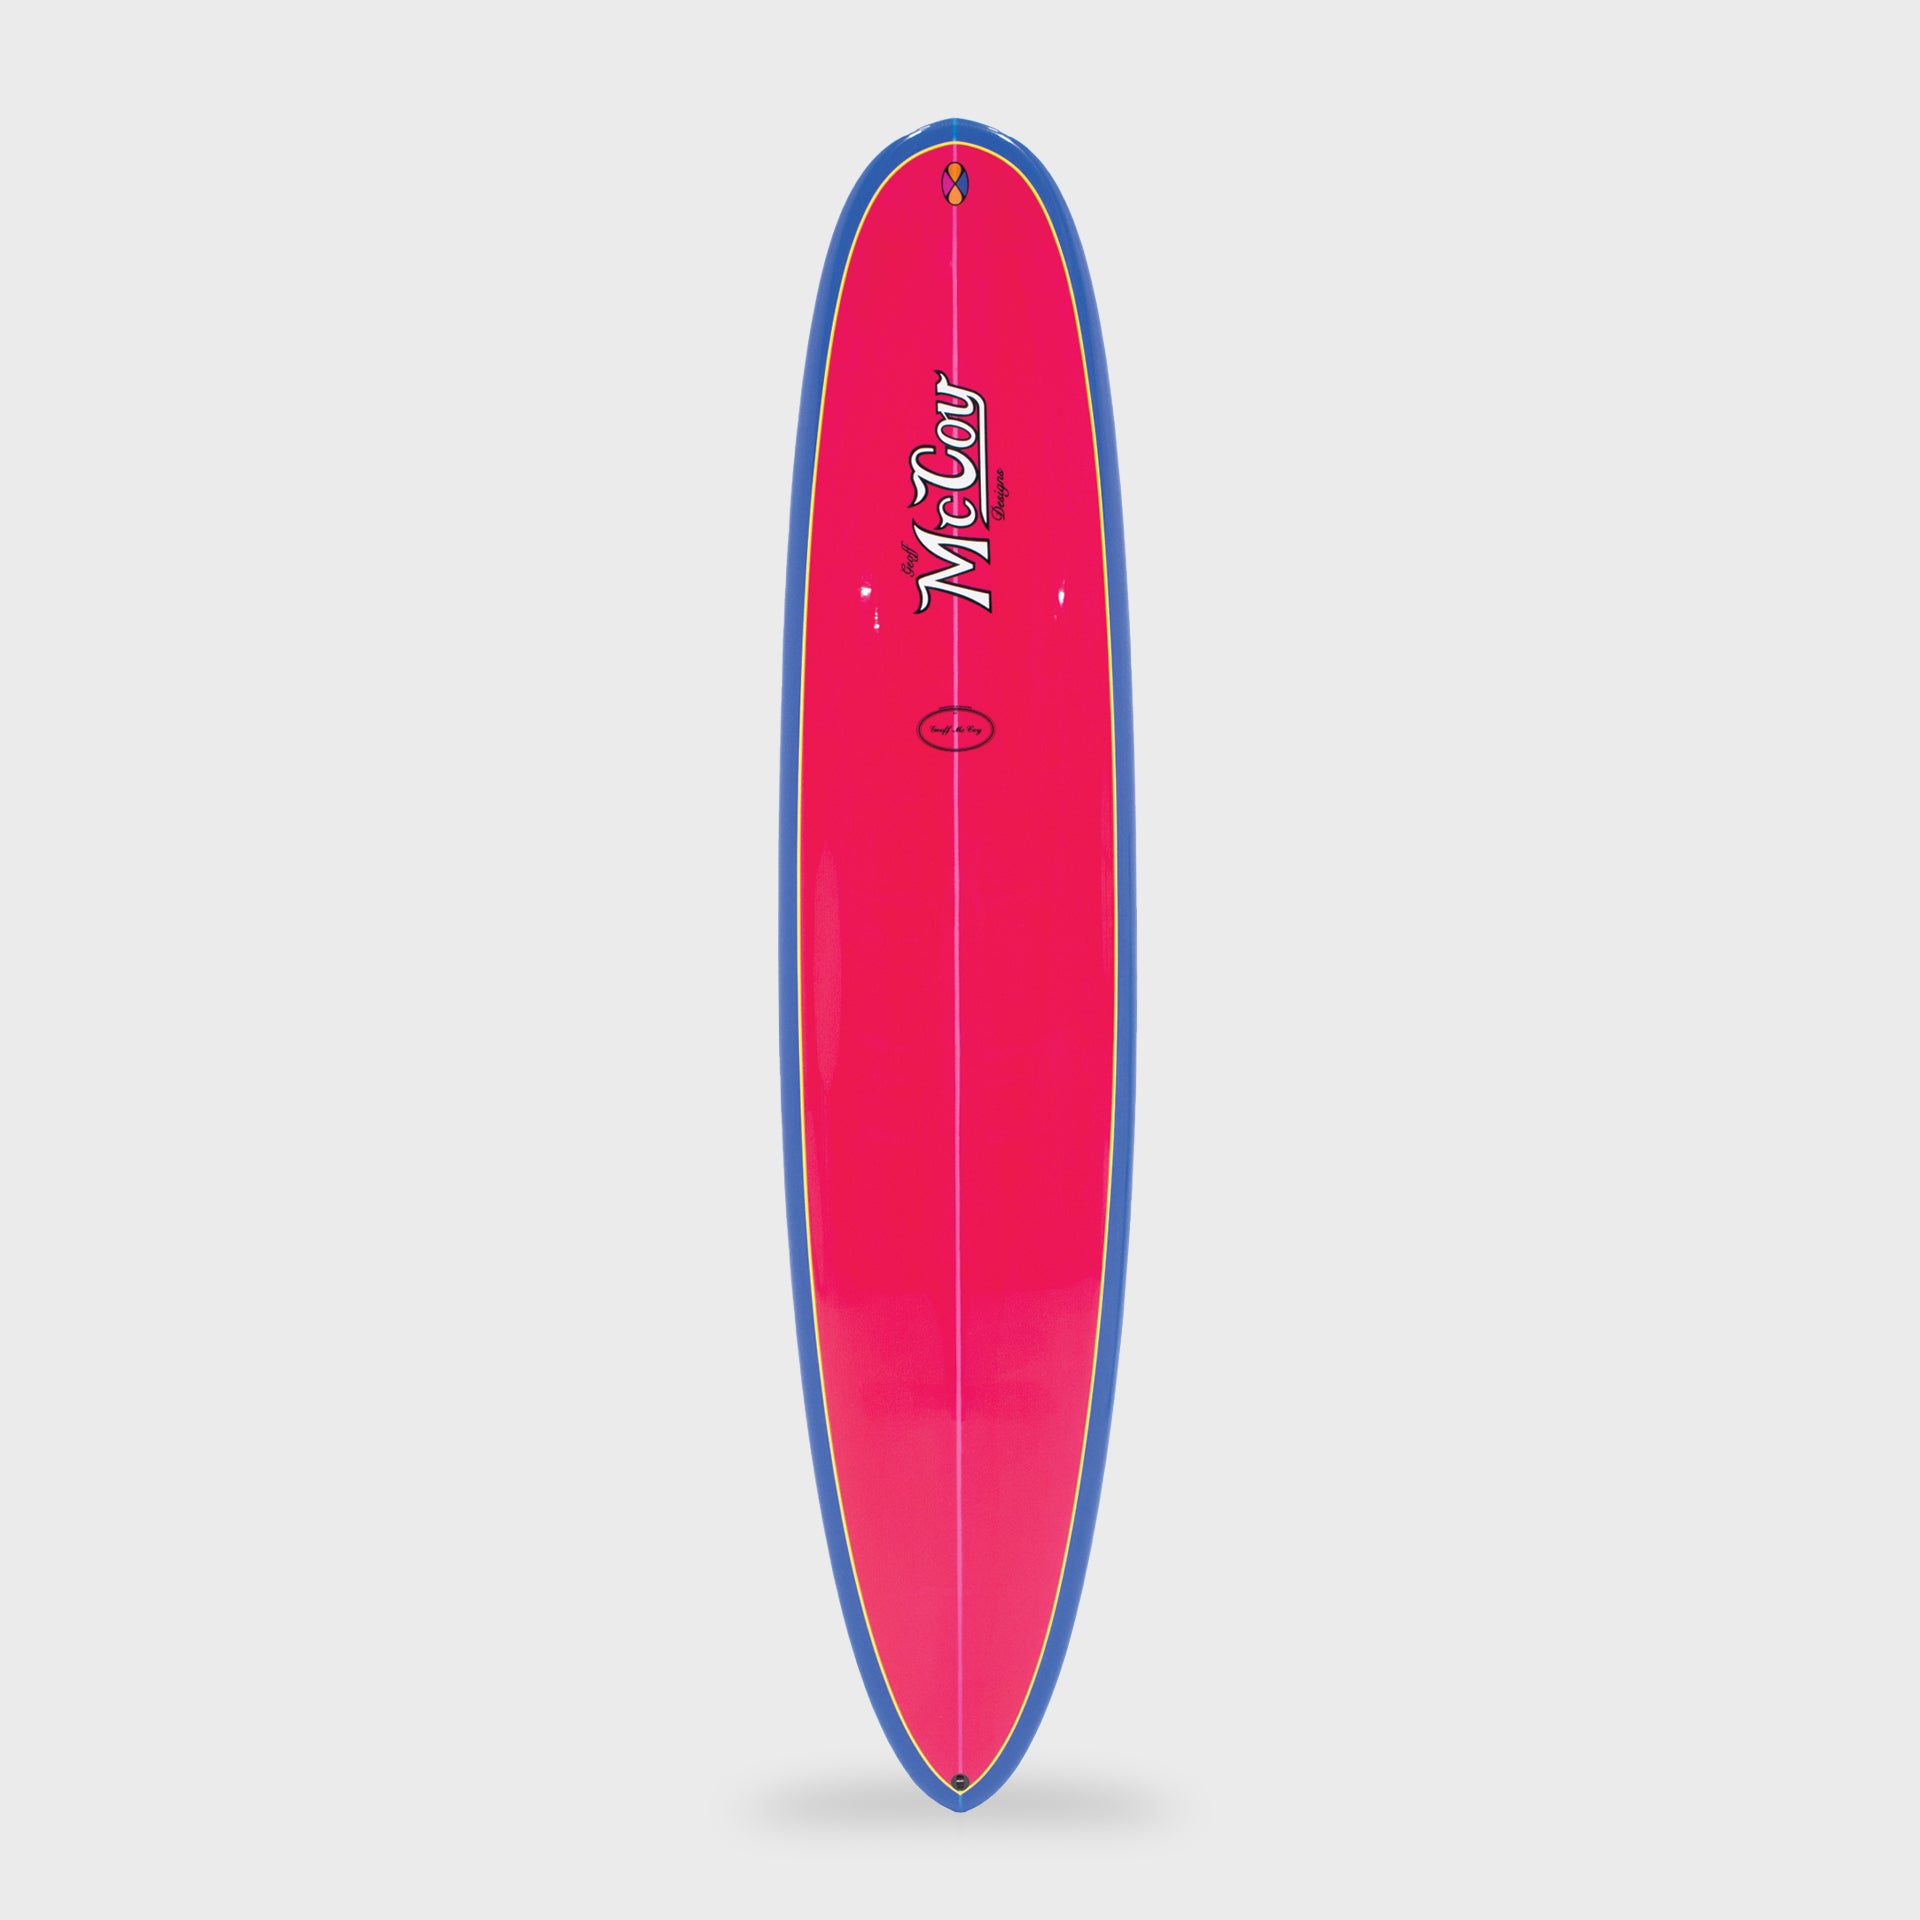 McCoy surfboards – ManGo Surfing